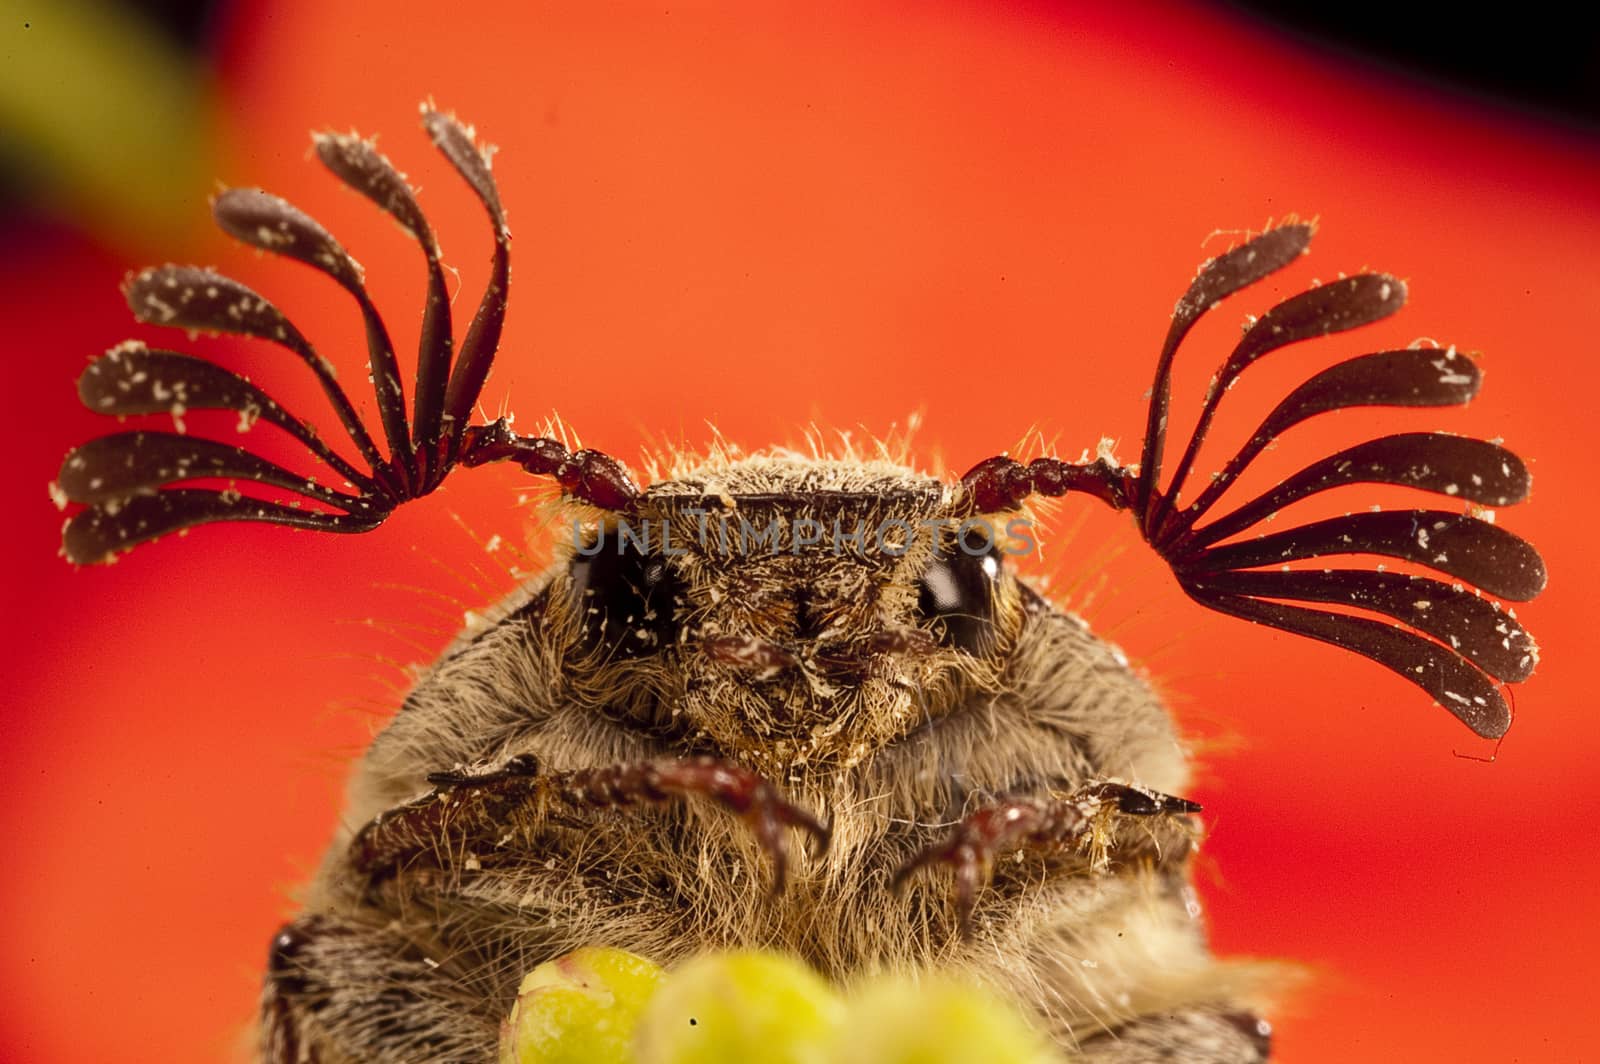 beetle sanjuanero portrait, Melolontha melolontha, Beetles, Coleoptera